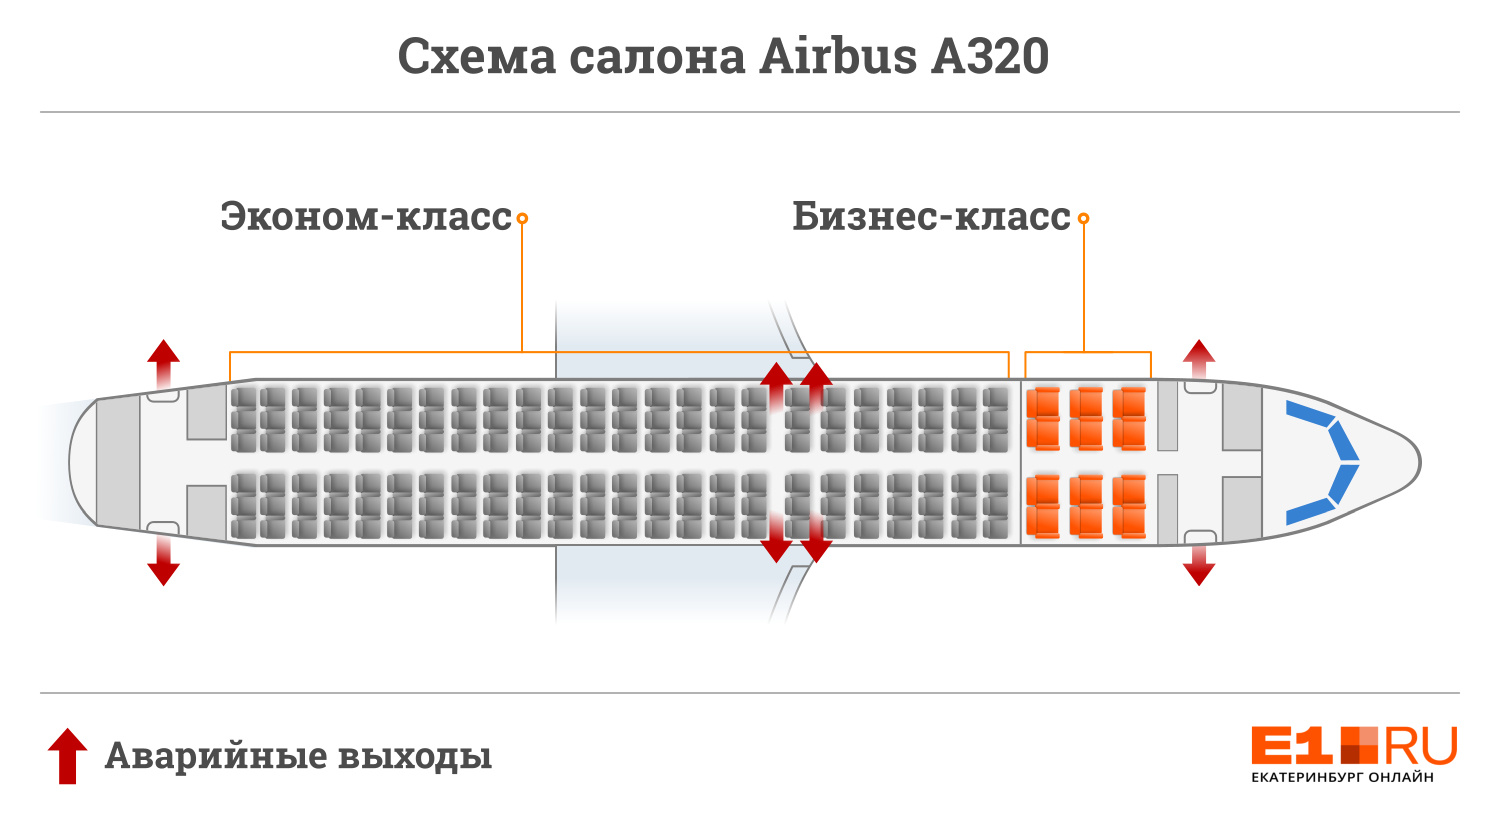 Схема самолета Аэробус а320